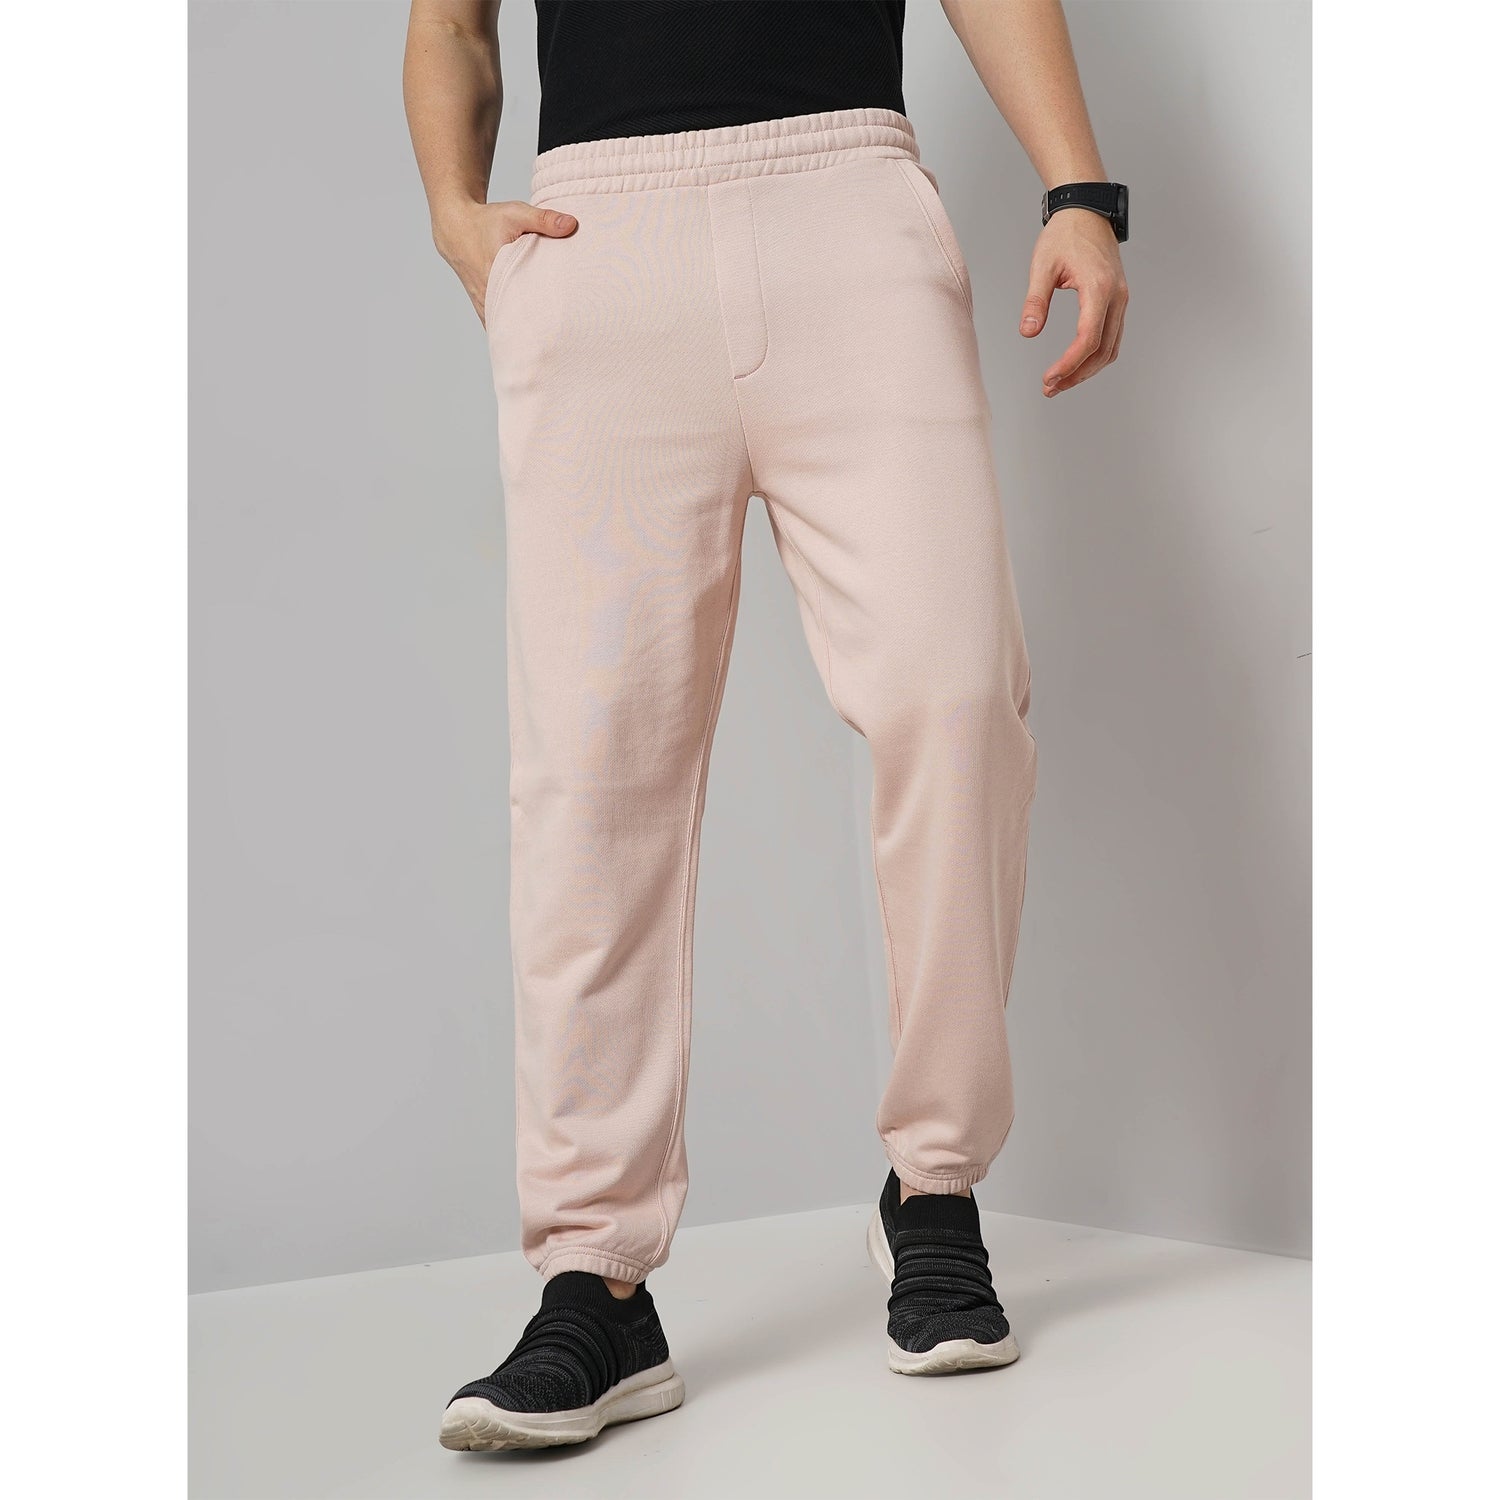 Men's Pink Solid Regular Fit Cotton Joggers Trousers (FOIDEA)